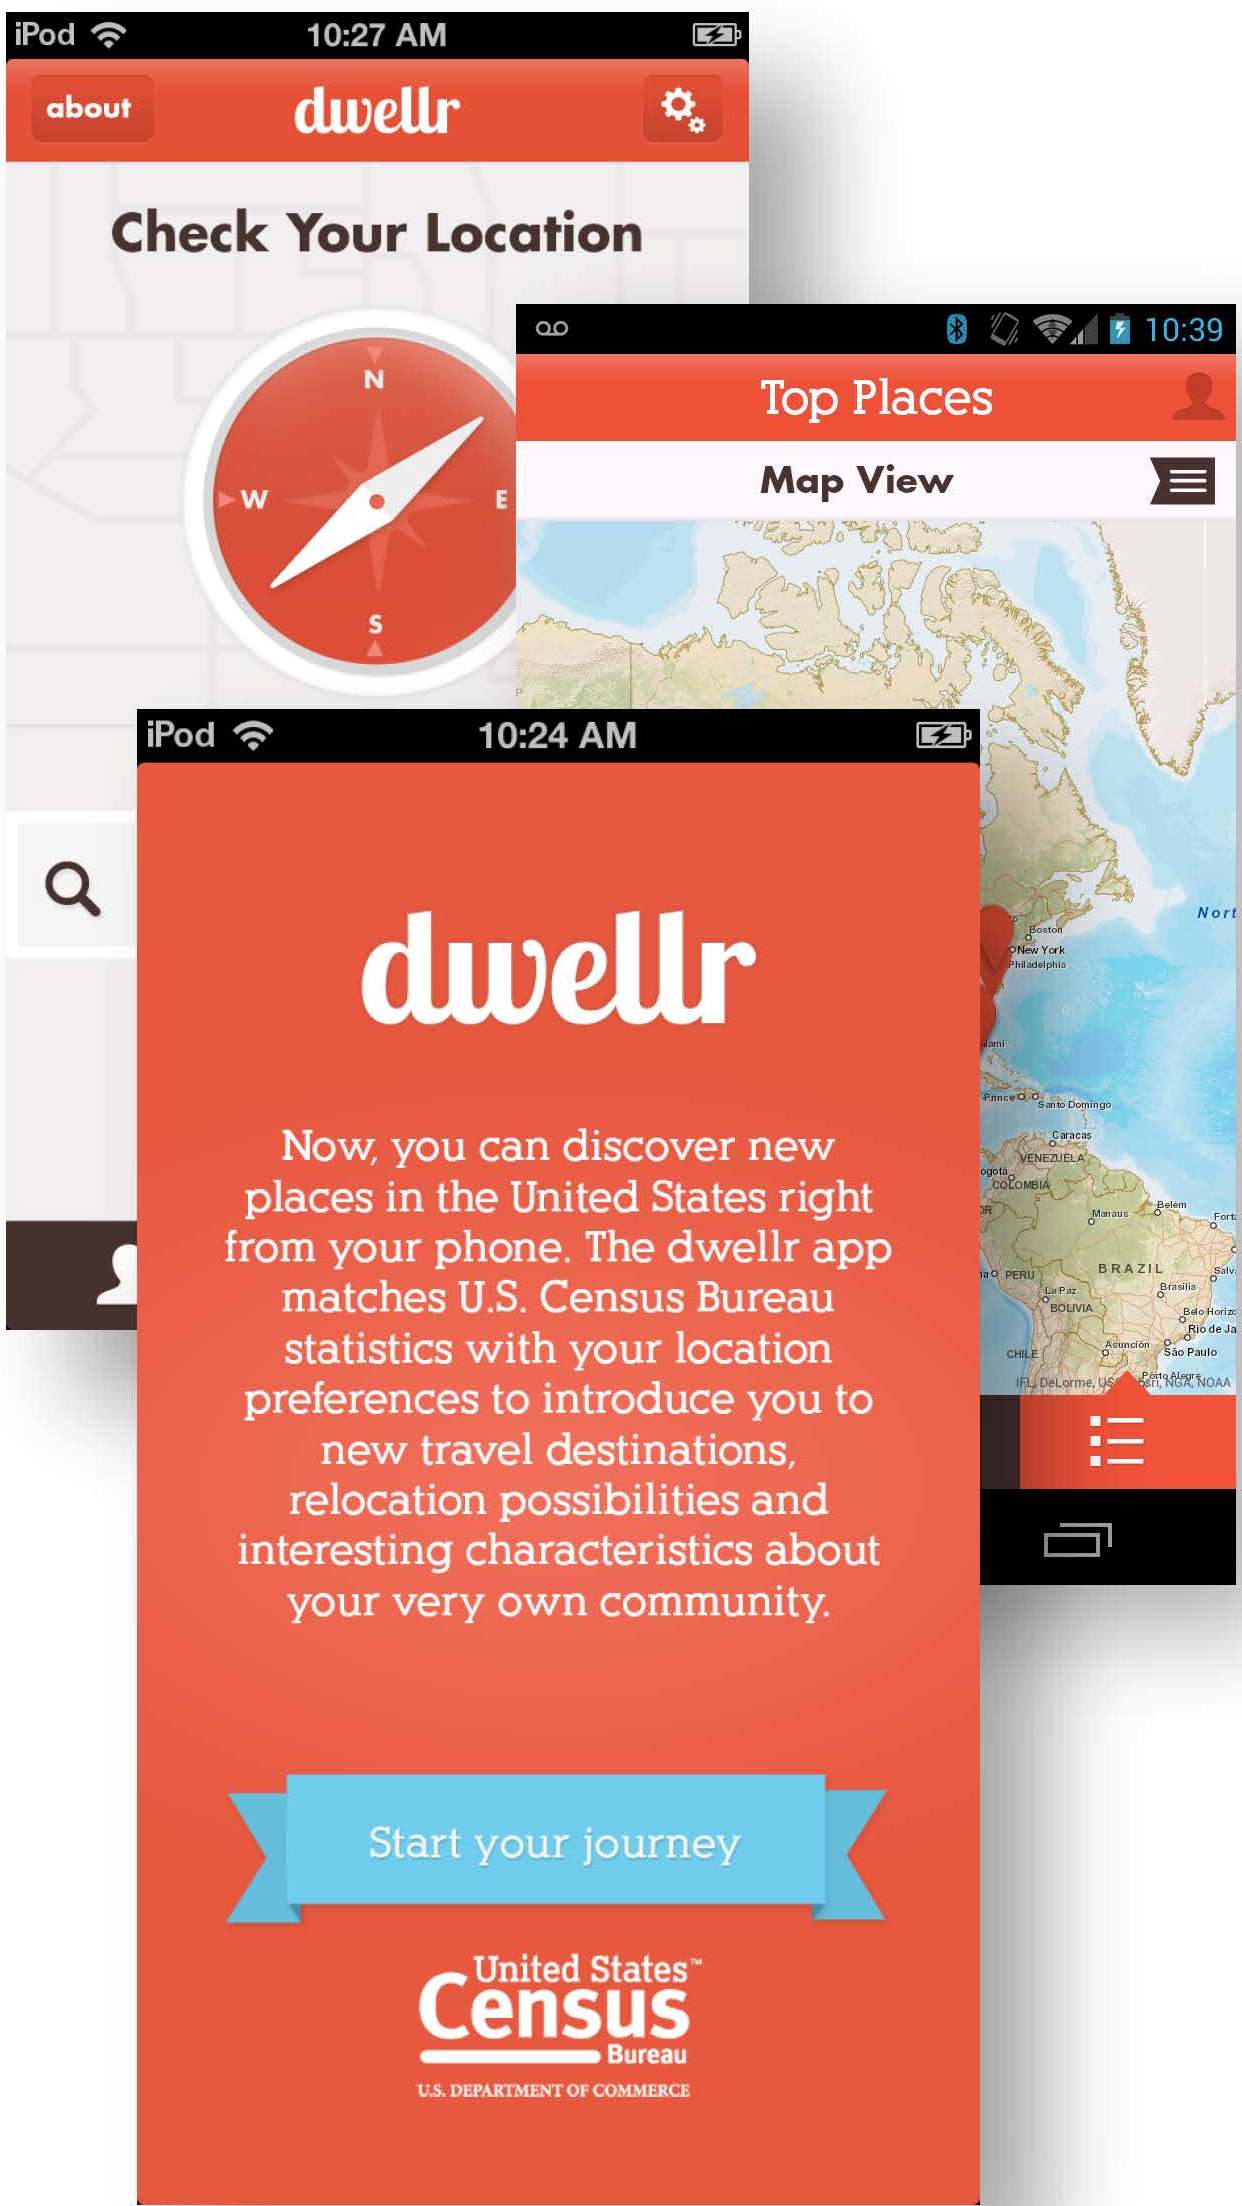 dwellr, a new mobile app from the U.S. Census Bureau